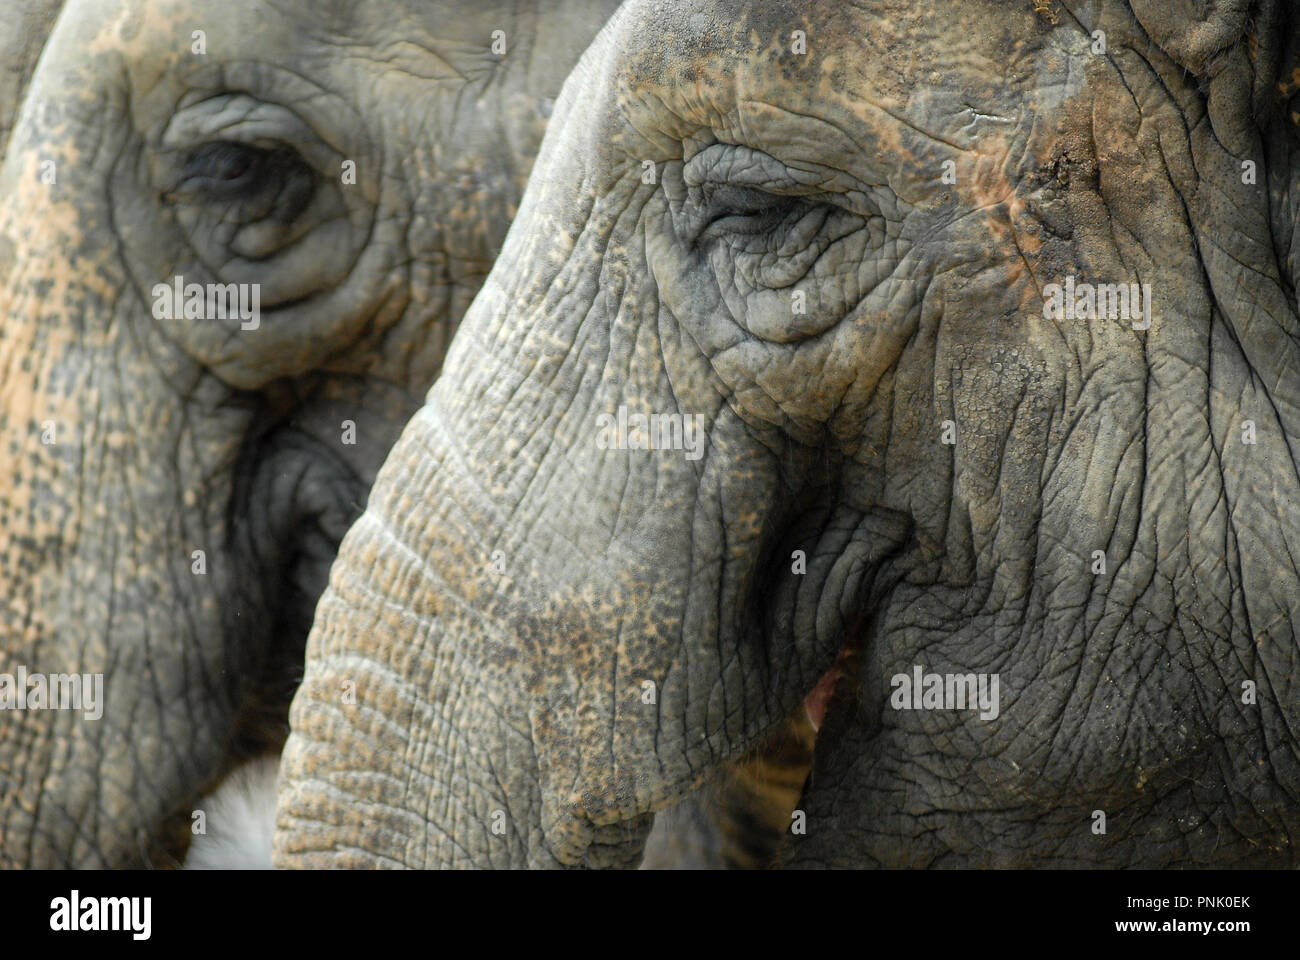 Elephants face close up shot in Ueno, Tokyo Stock Photo